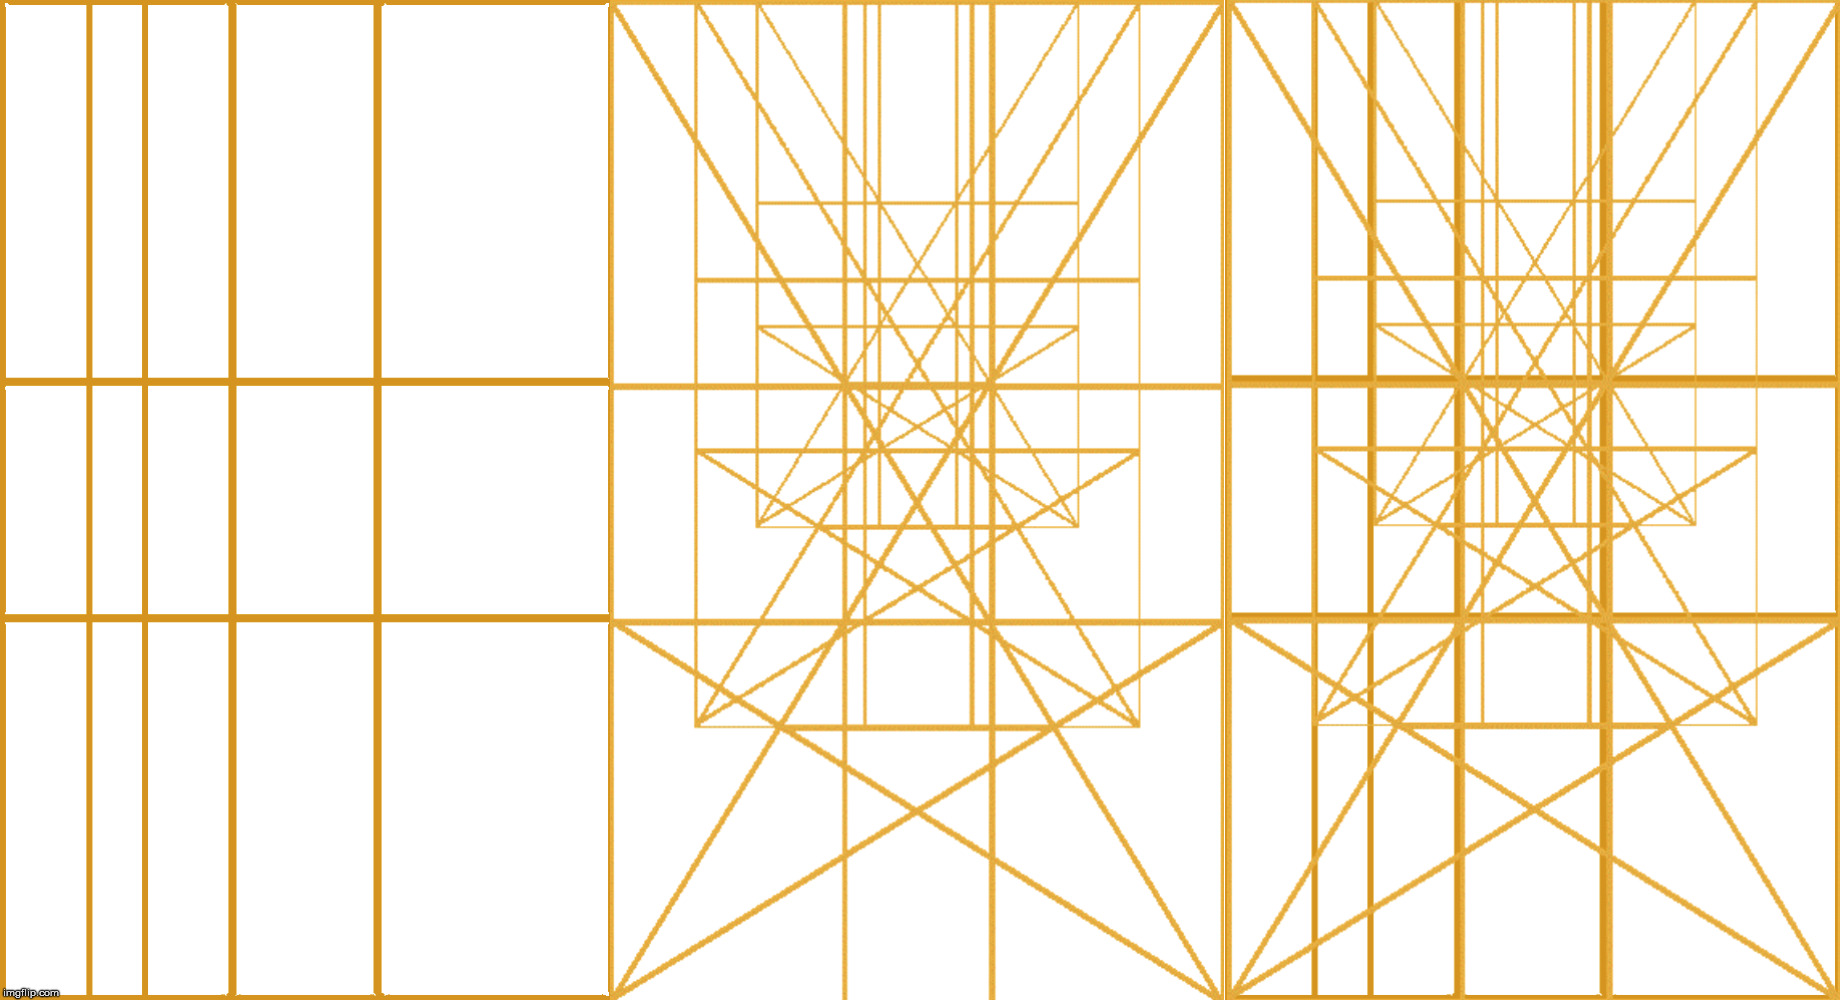 3 Golden Ratio pics. | image tagged in the golden ratio,fibonacci,math,sacred,geometry | made w/ Imgflip meme maker